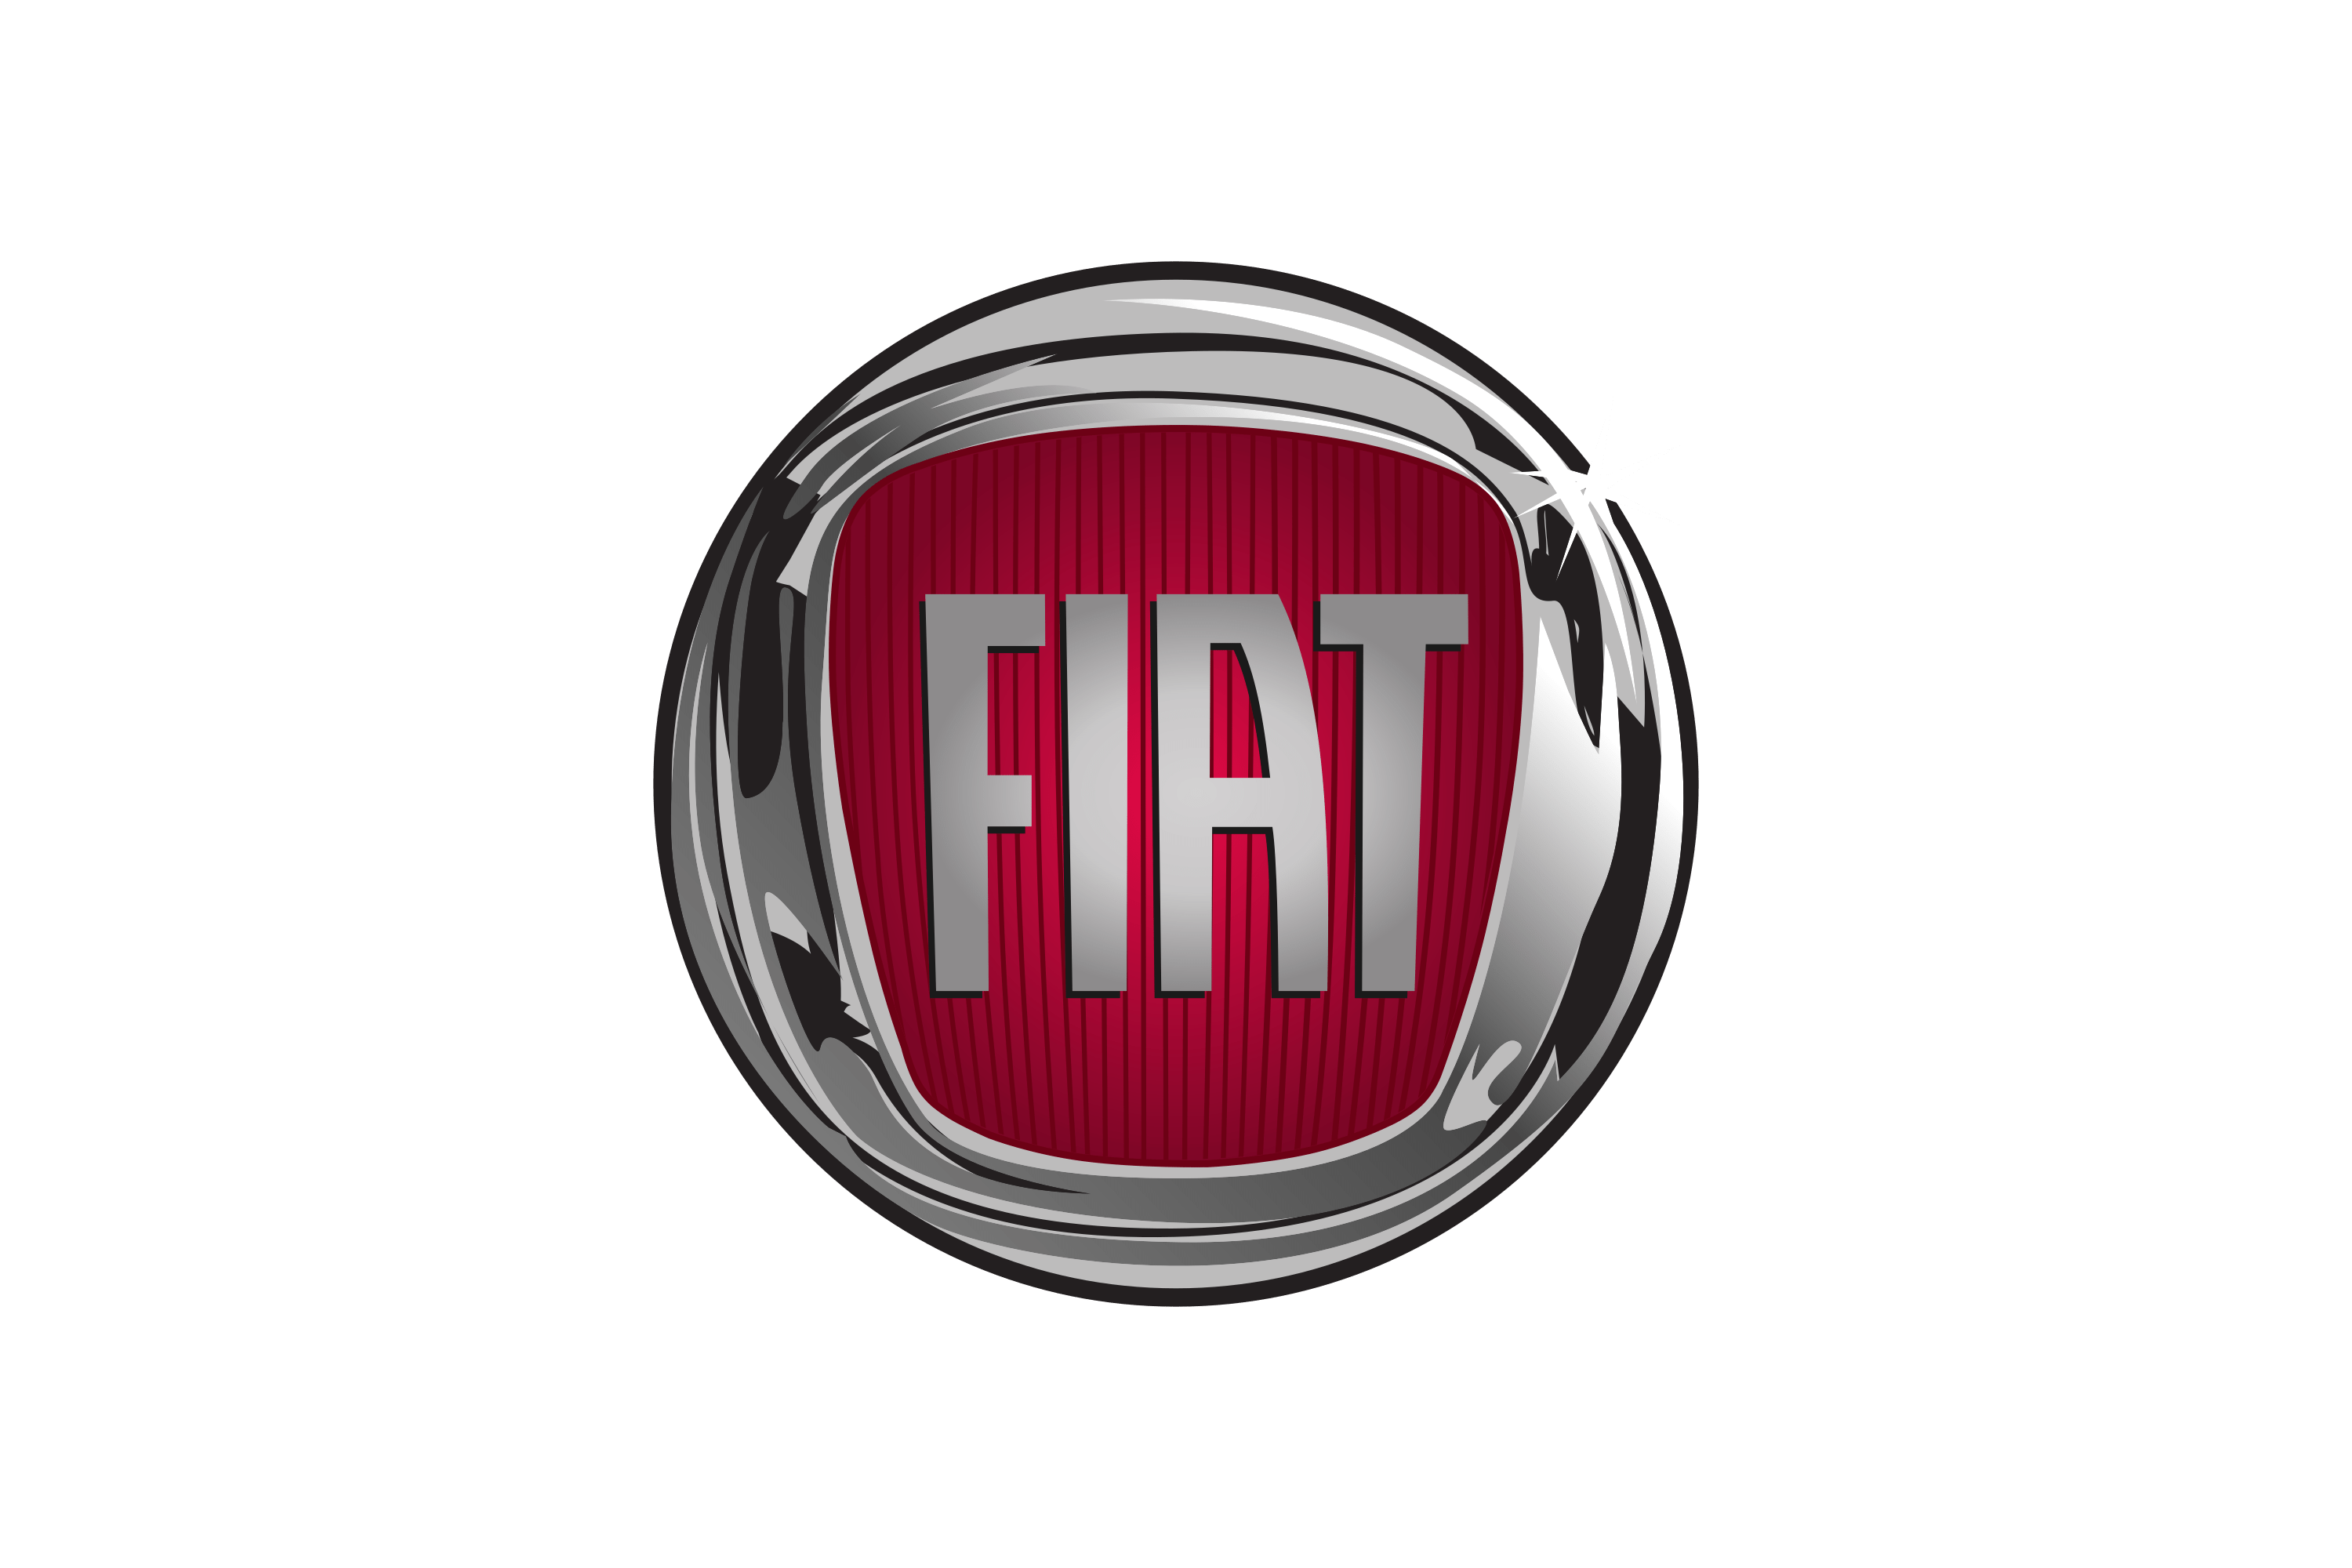 Download Fiat Logo in SVG Vector or PNG File Format 